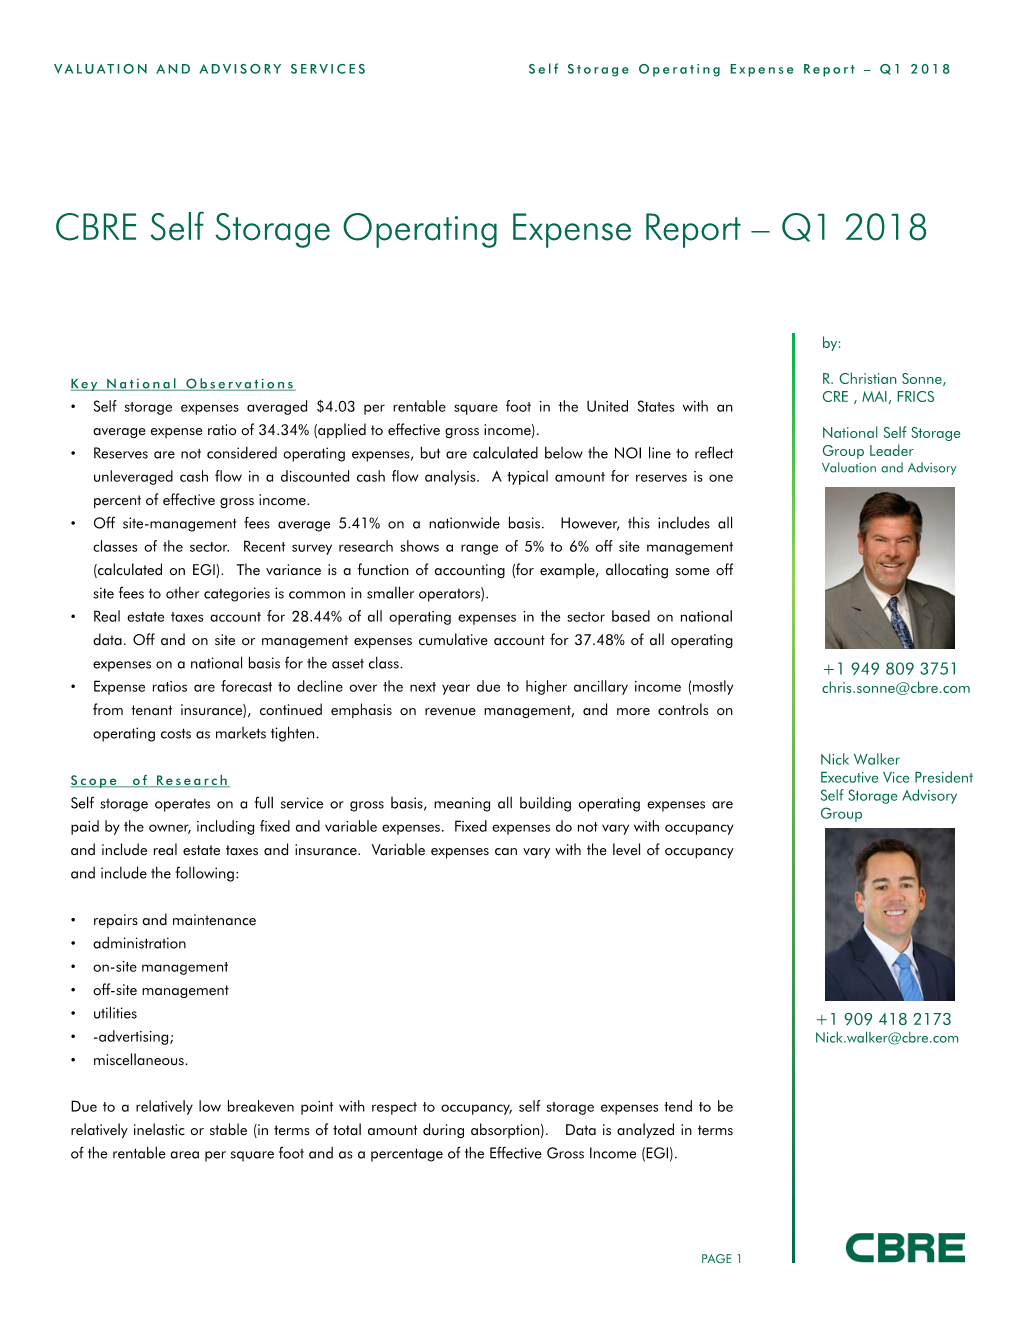 CBRE Self Storage Operating Expense Report – Q1 2018